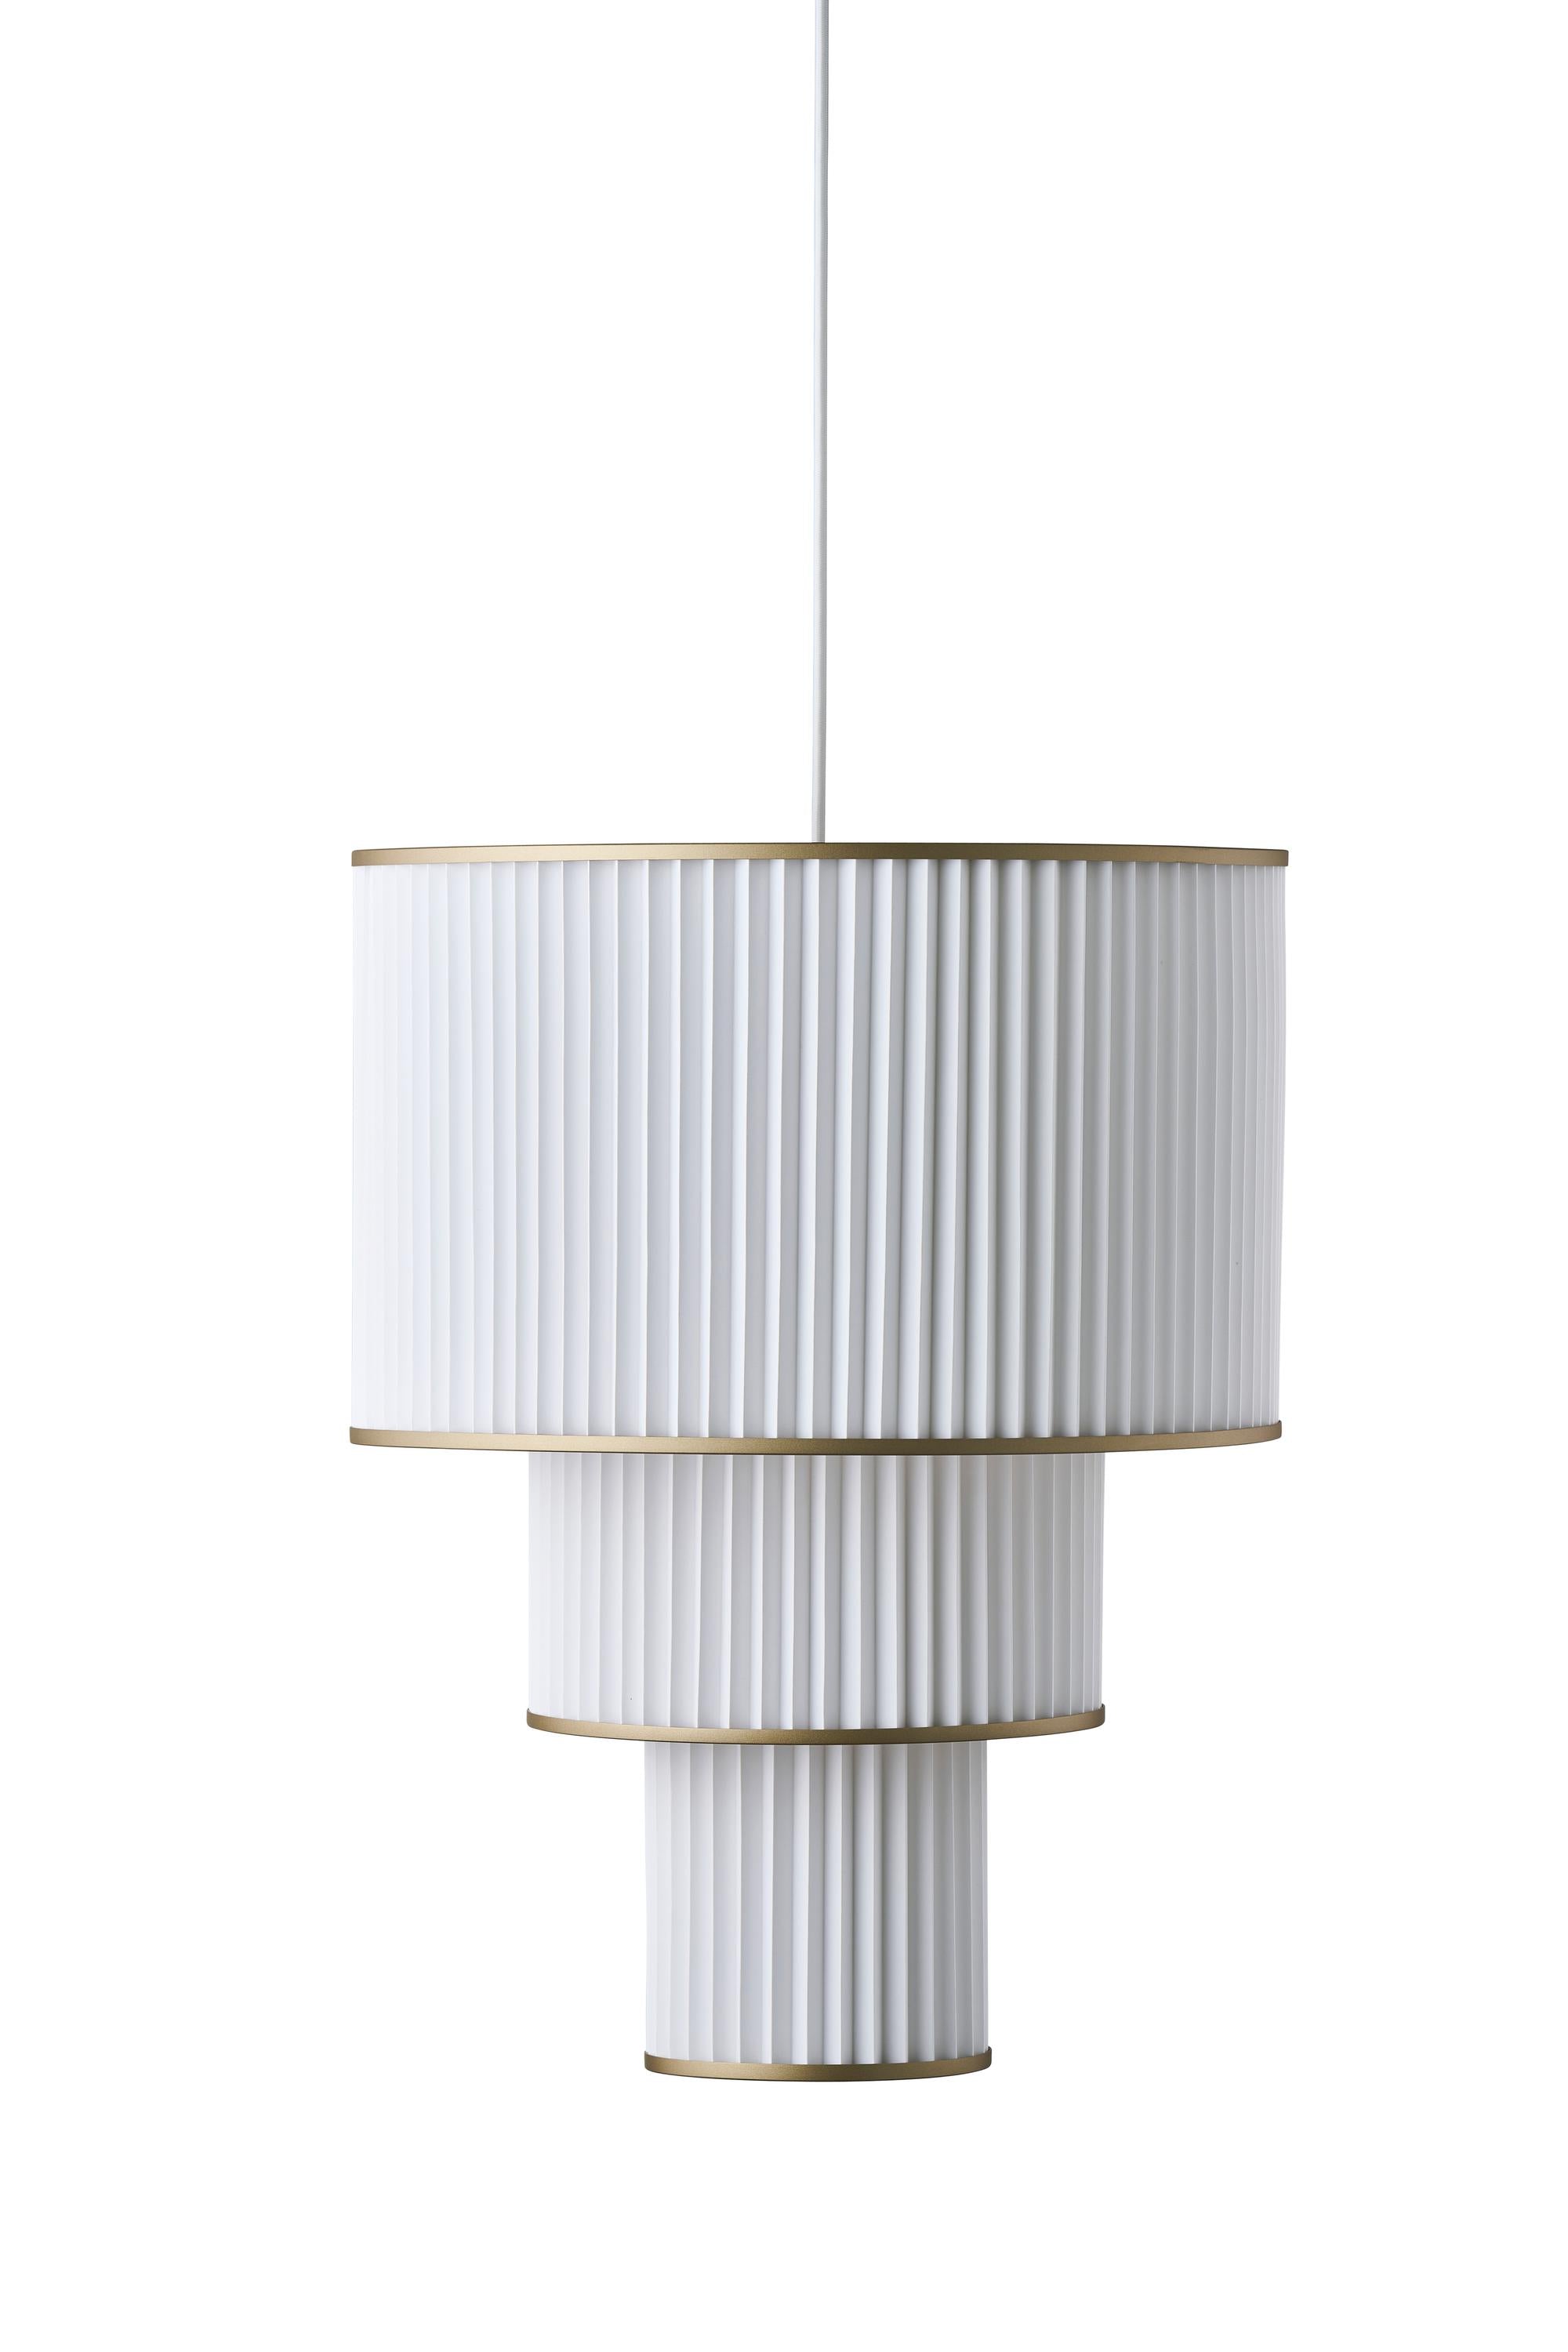 Le Klint Plivello Suspension Lamp Golden/White med 3 nyanser (S M L)